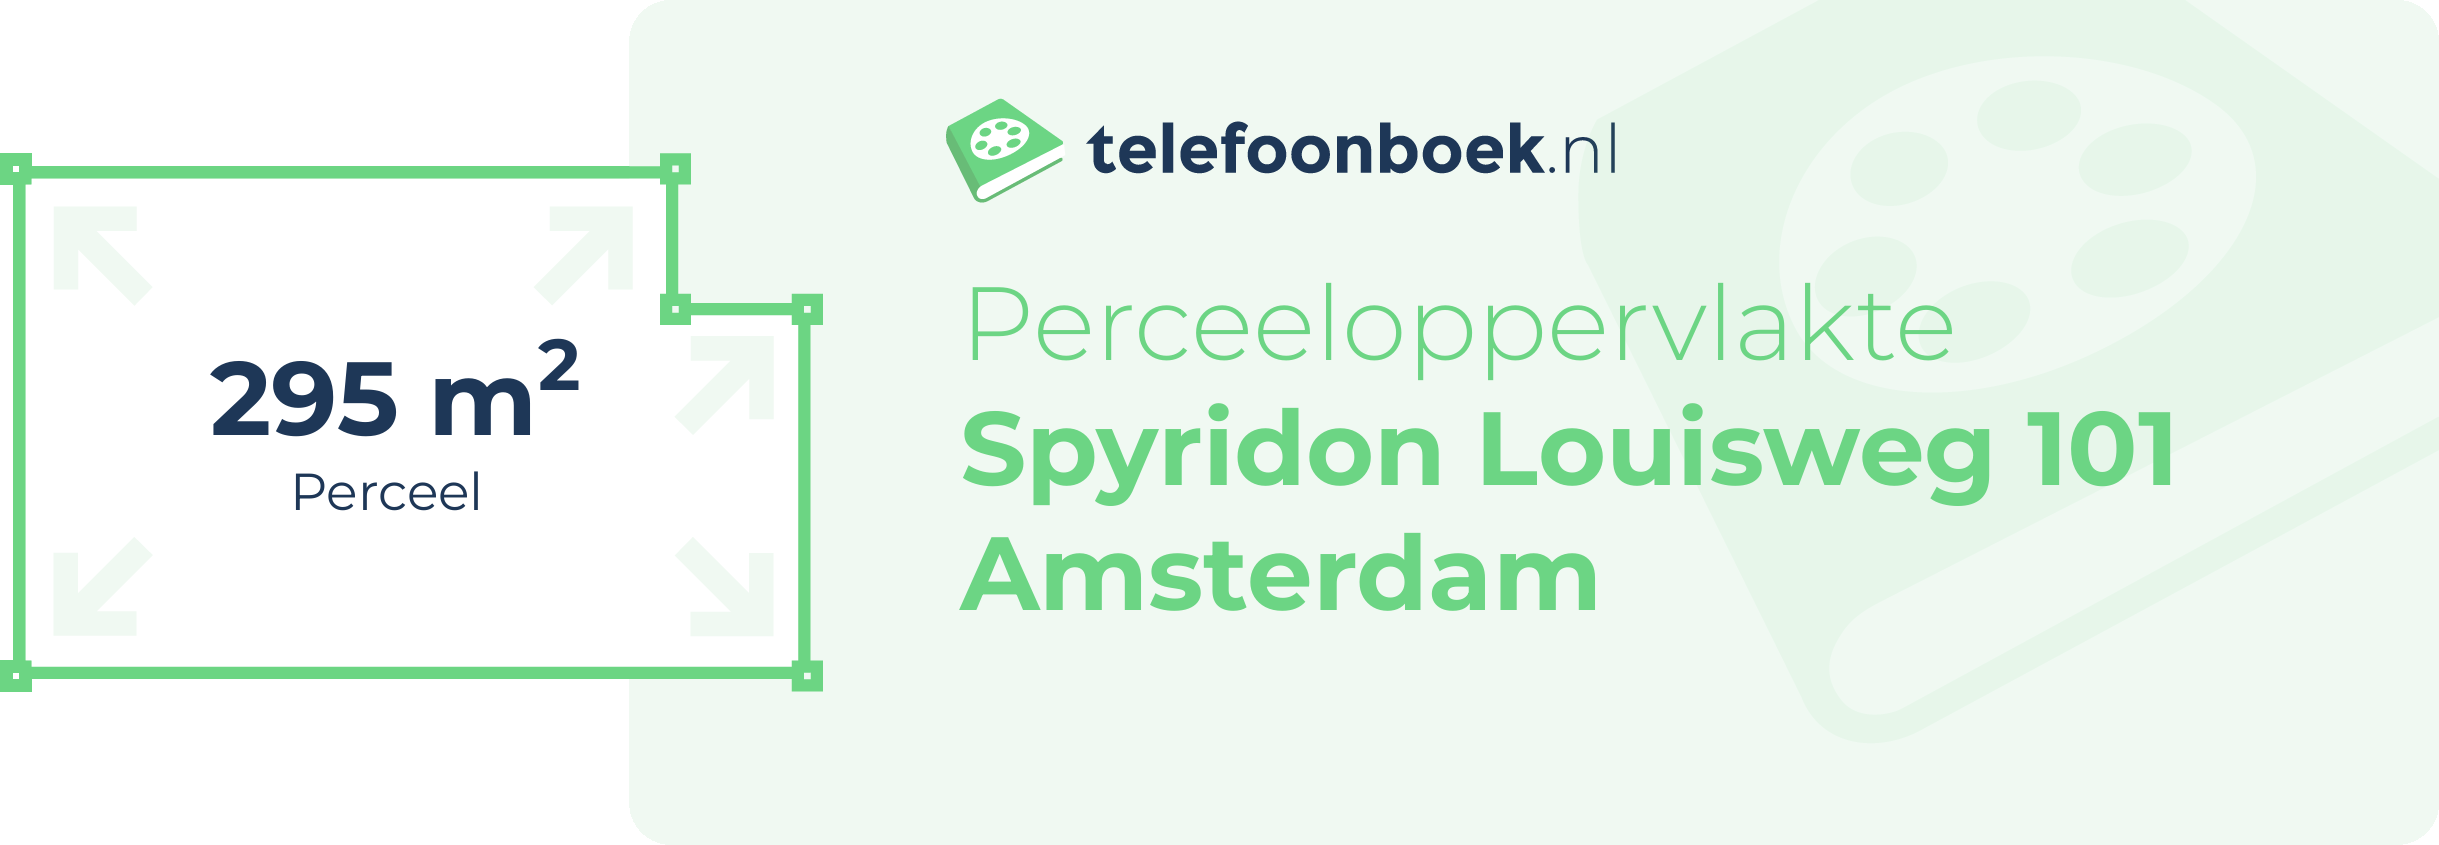 Perceeloppervlakte Spyridon Louisweg 101 Amsterdam